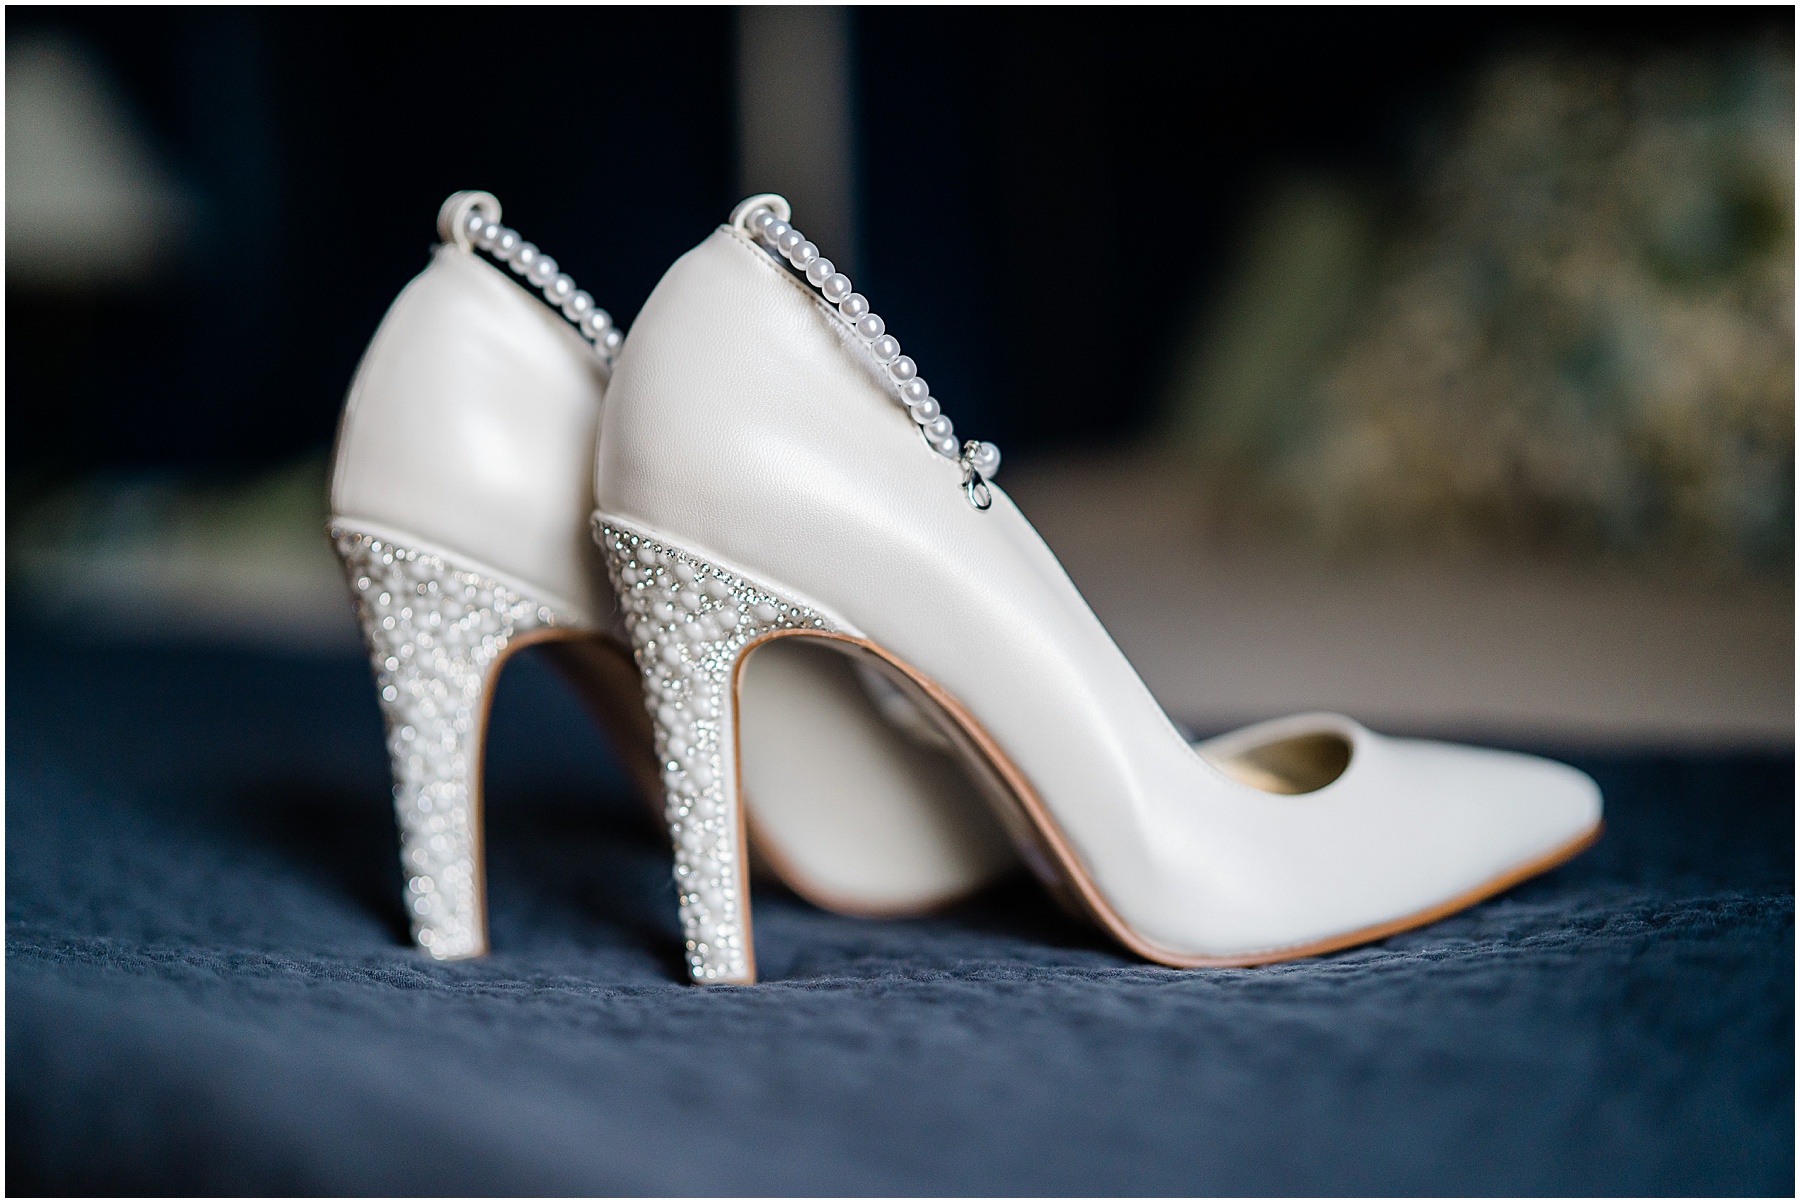 Fort Wayne wedding photographer captures bride's wedding shoes